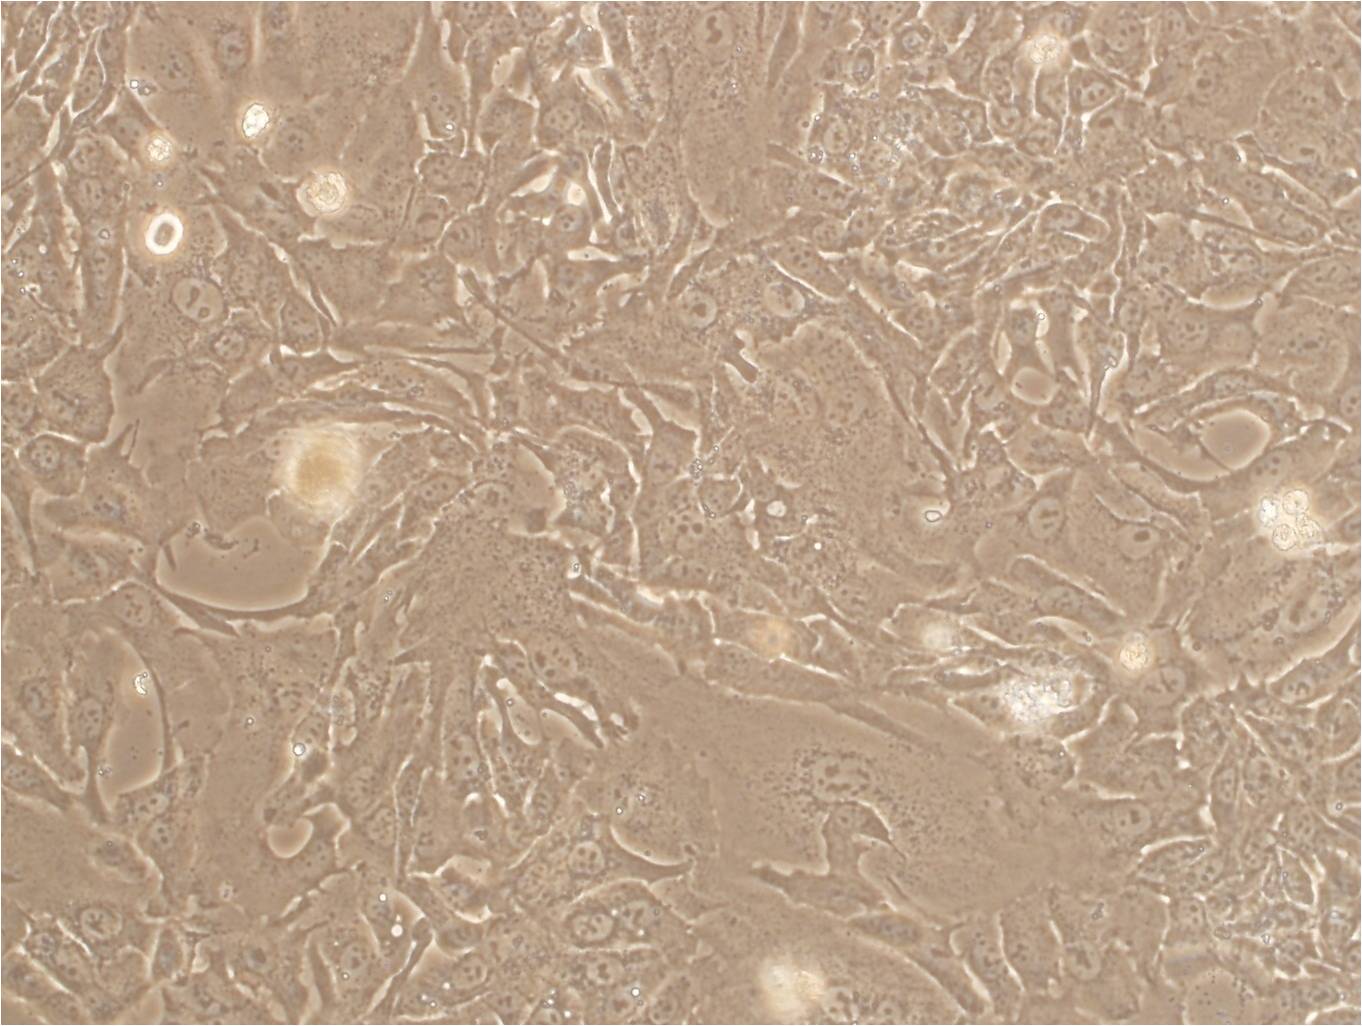 NCI-H526:人肺癌复苏细胞(提供STR鉴定图谱)